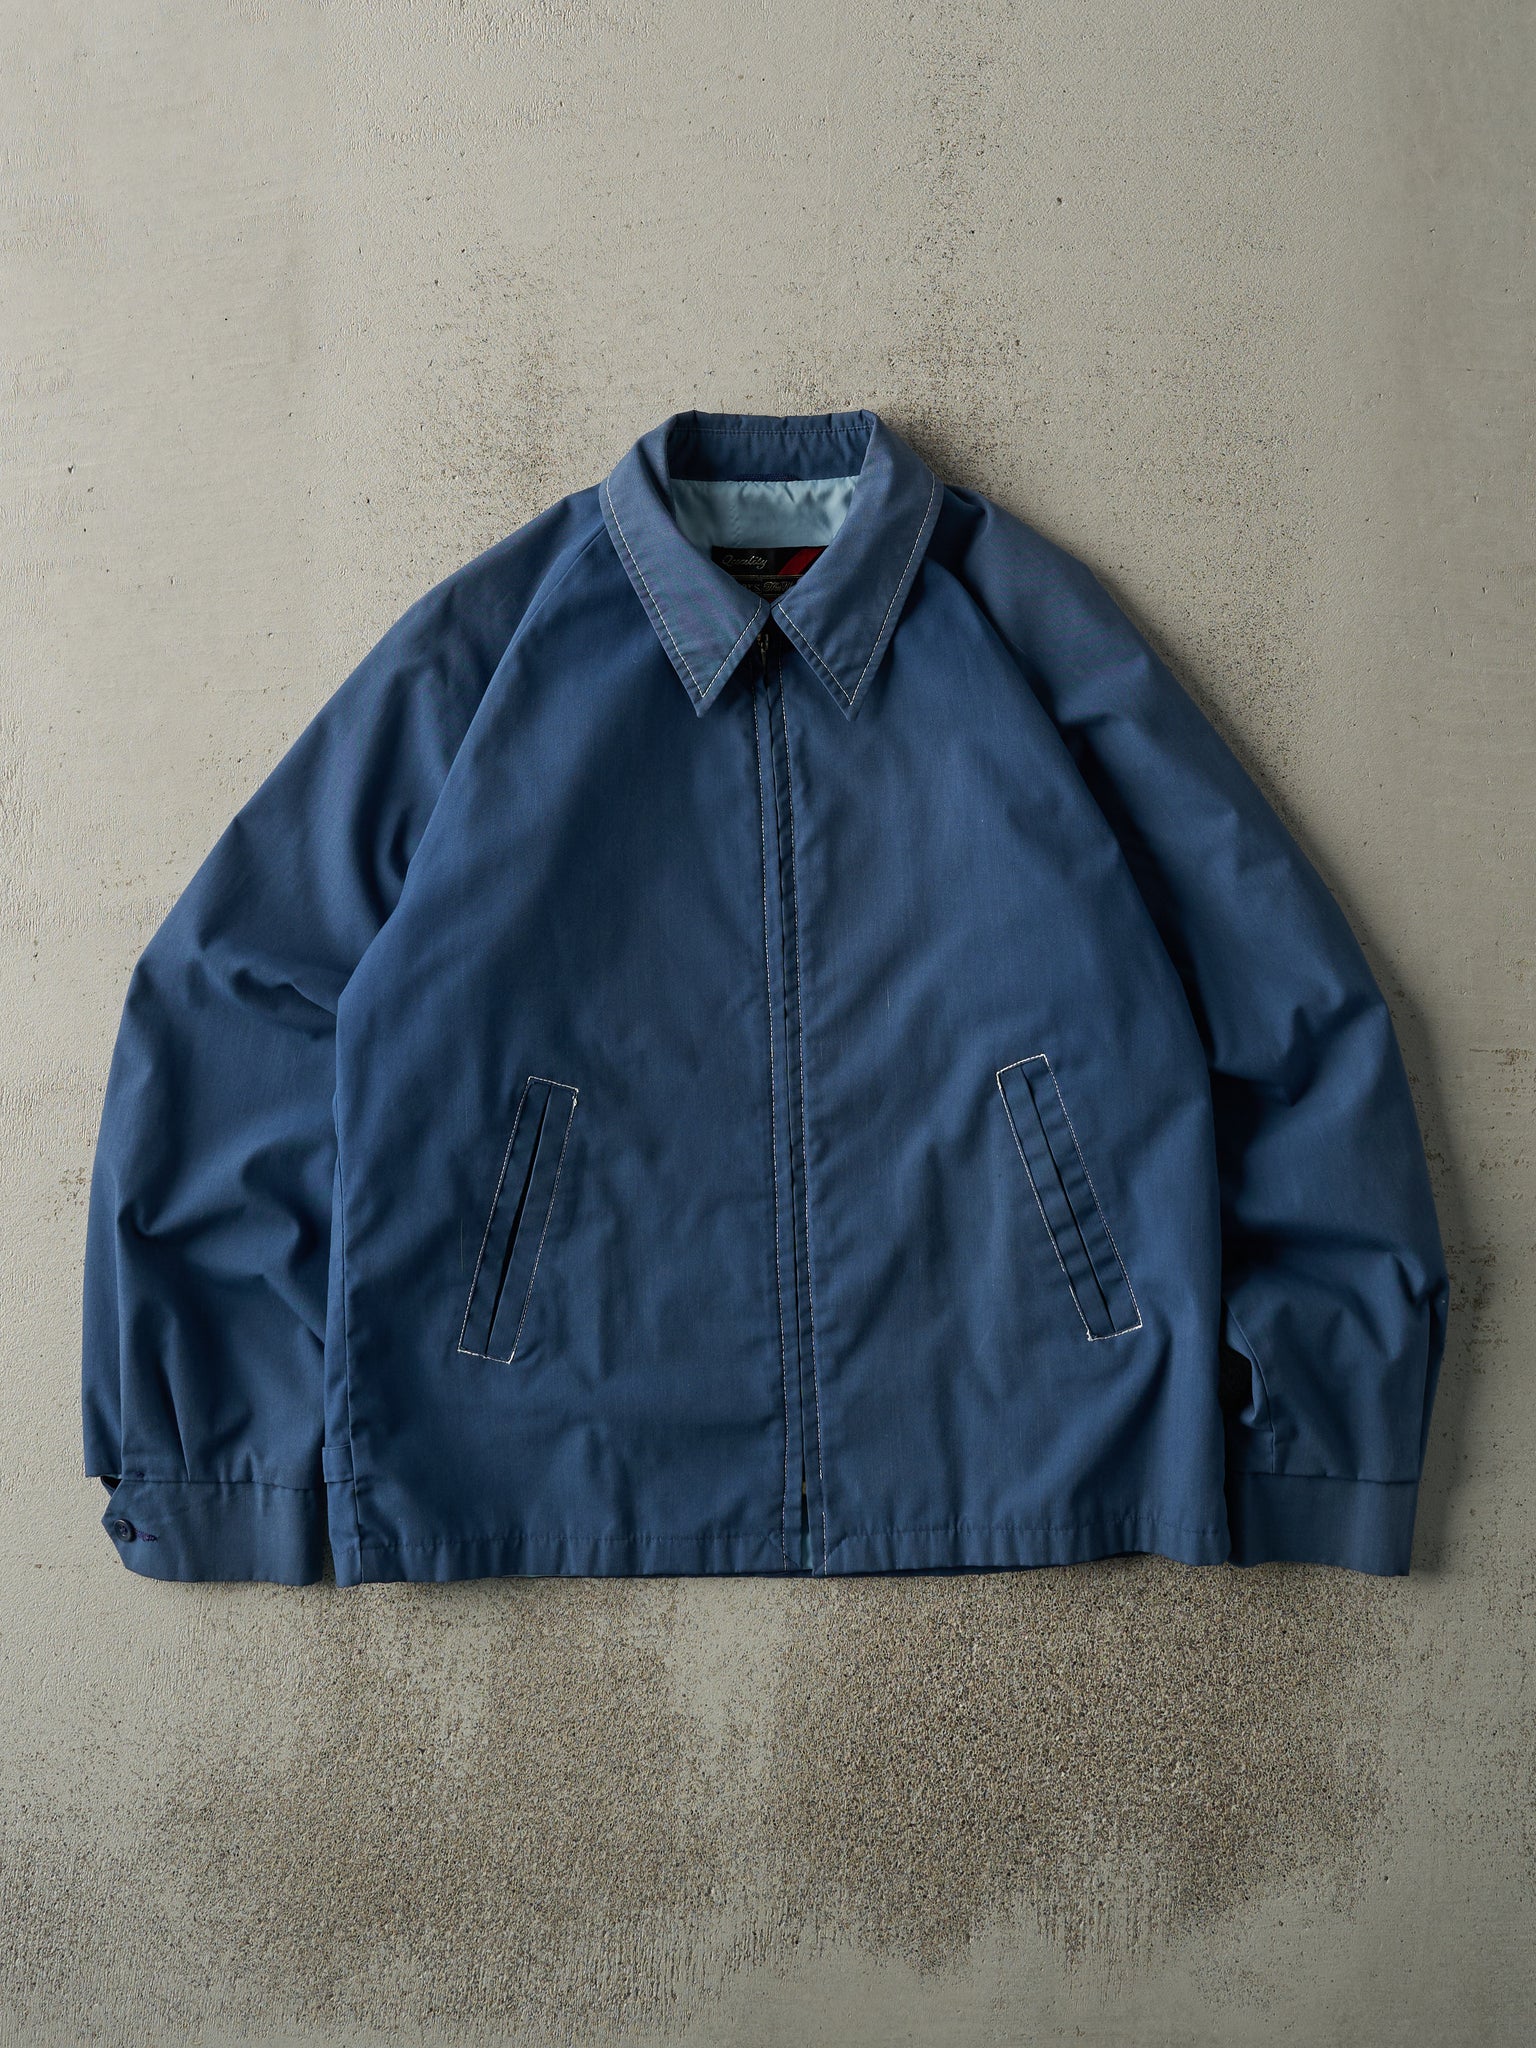 Vintage 70s Blue Collared Lightweight Jacket (S/M)